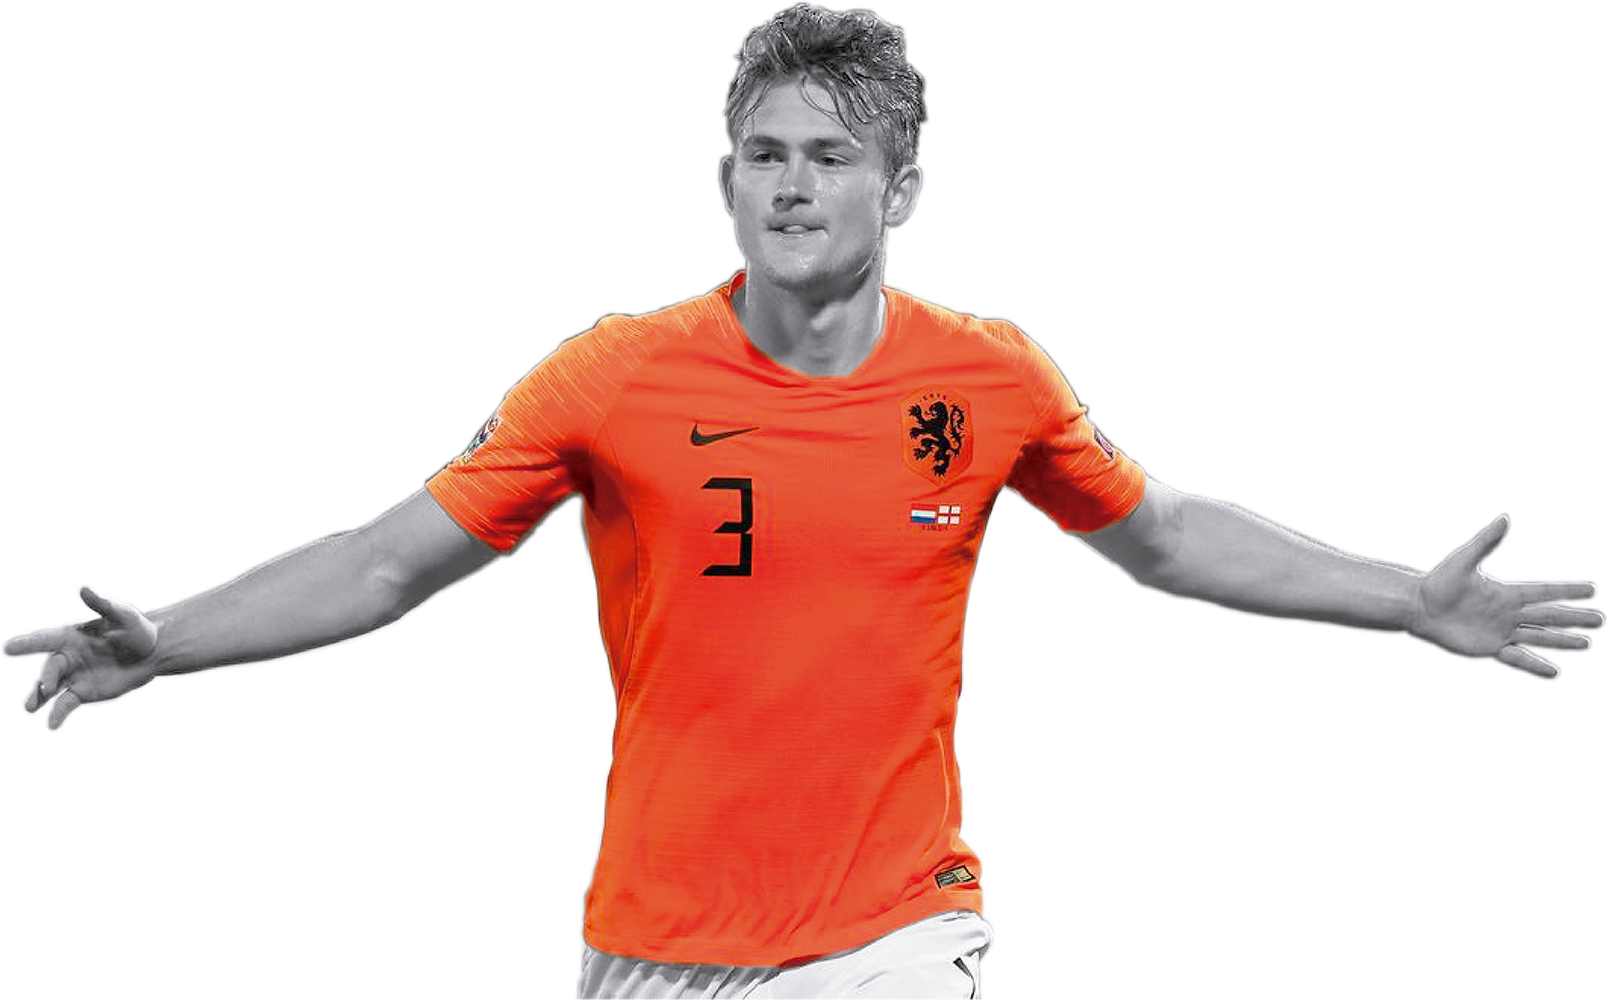 Orange Jersey Football Player Gesture PNG image